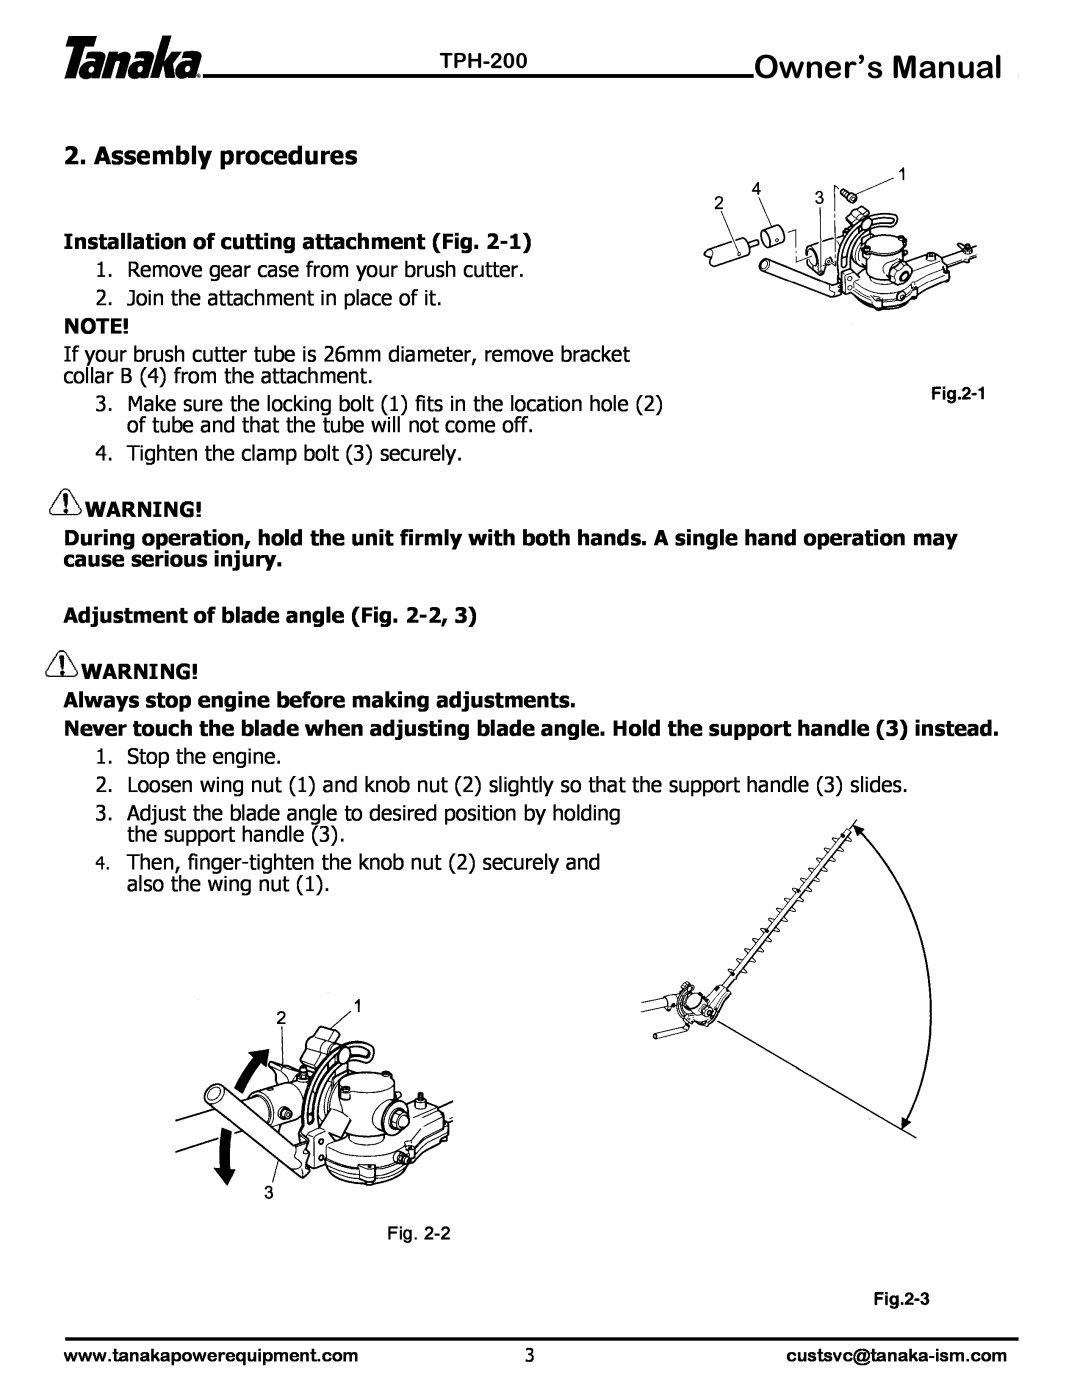 Tanaka TPH-200 manual Assembly procedures 